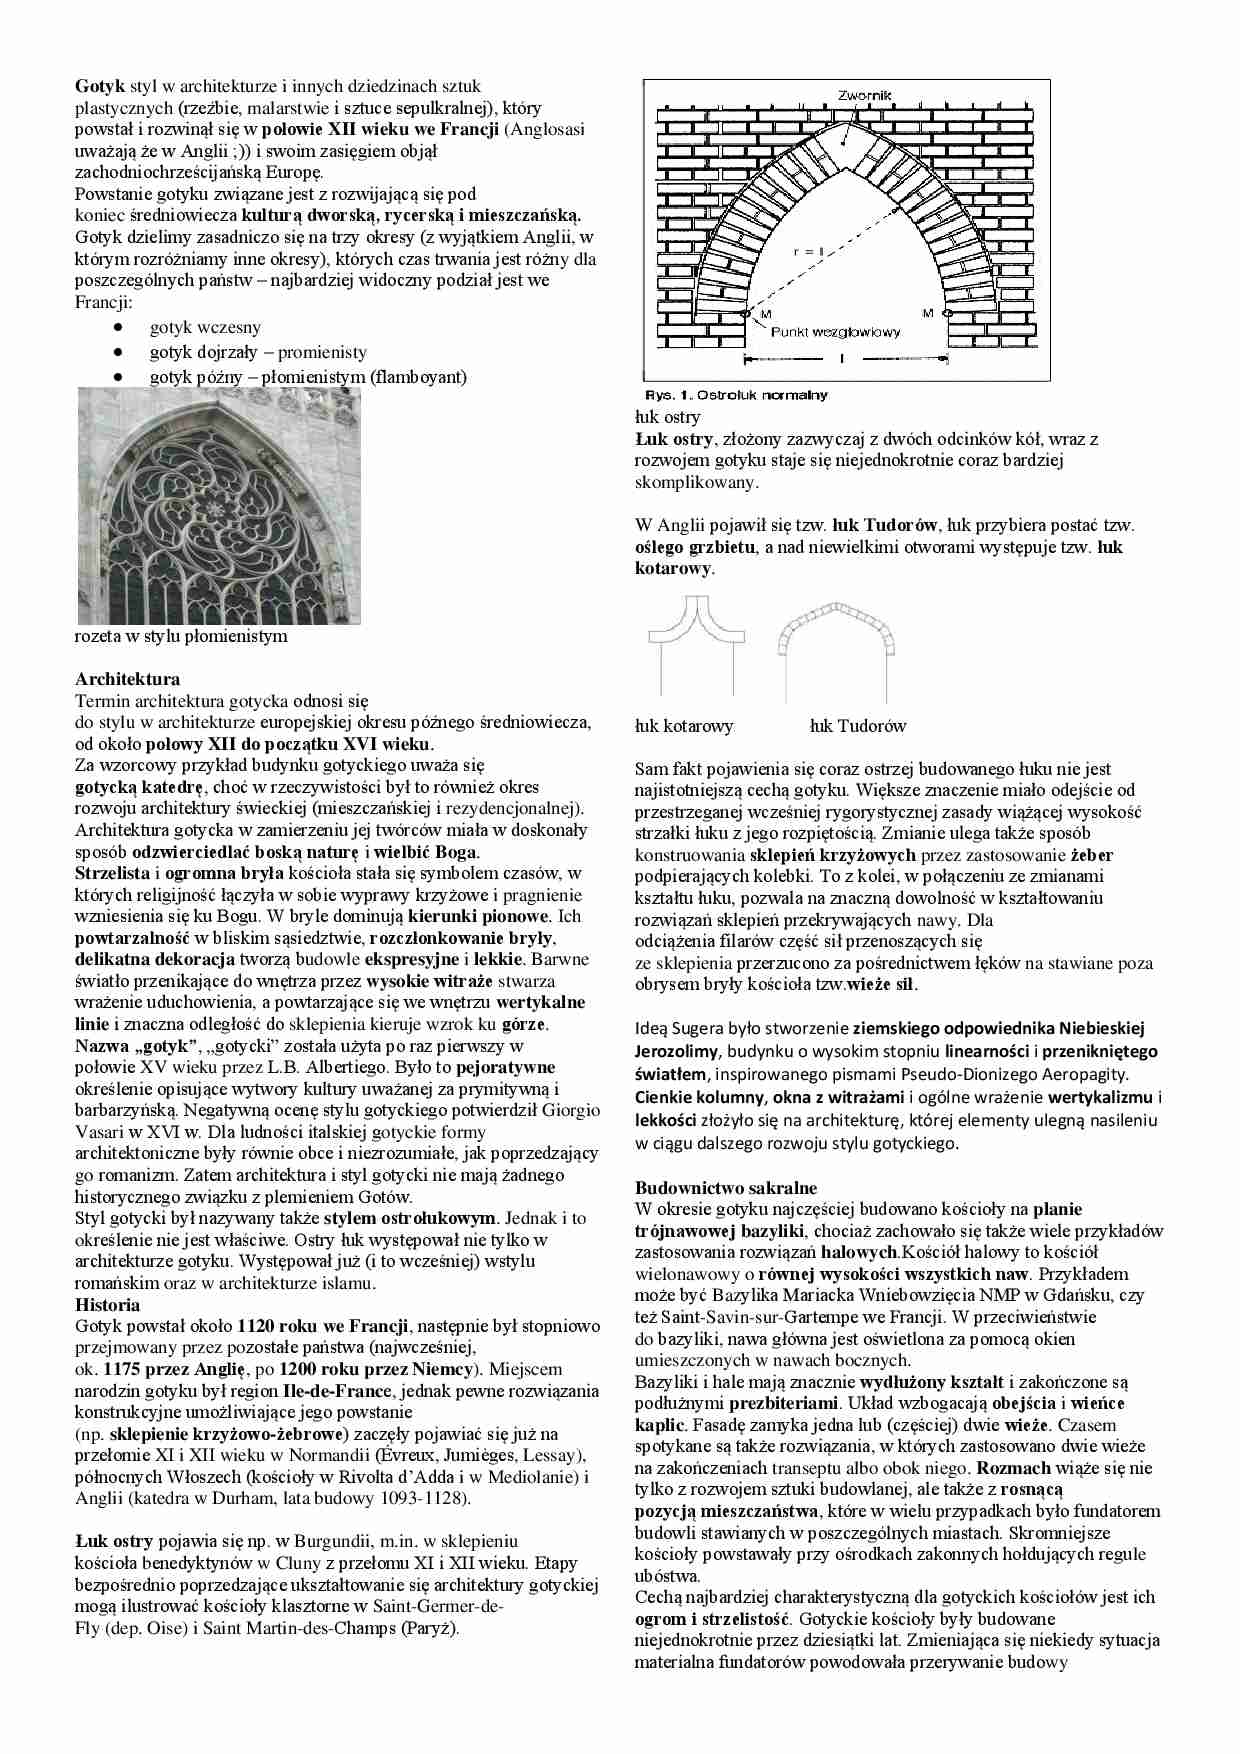 Gotyk i protorenesans - strona 1